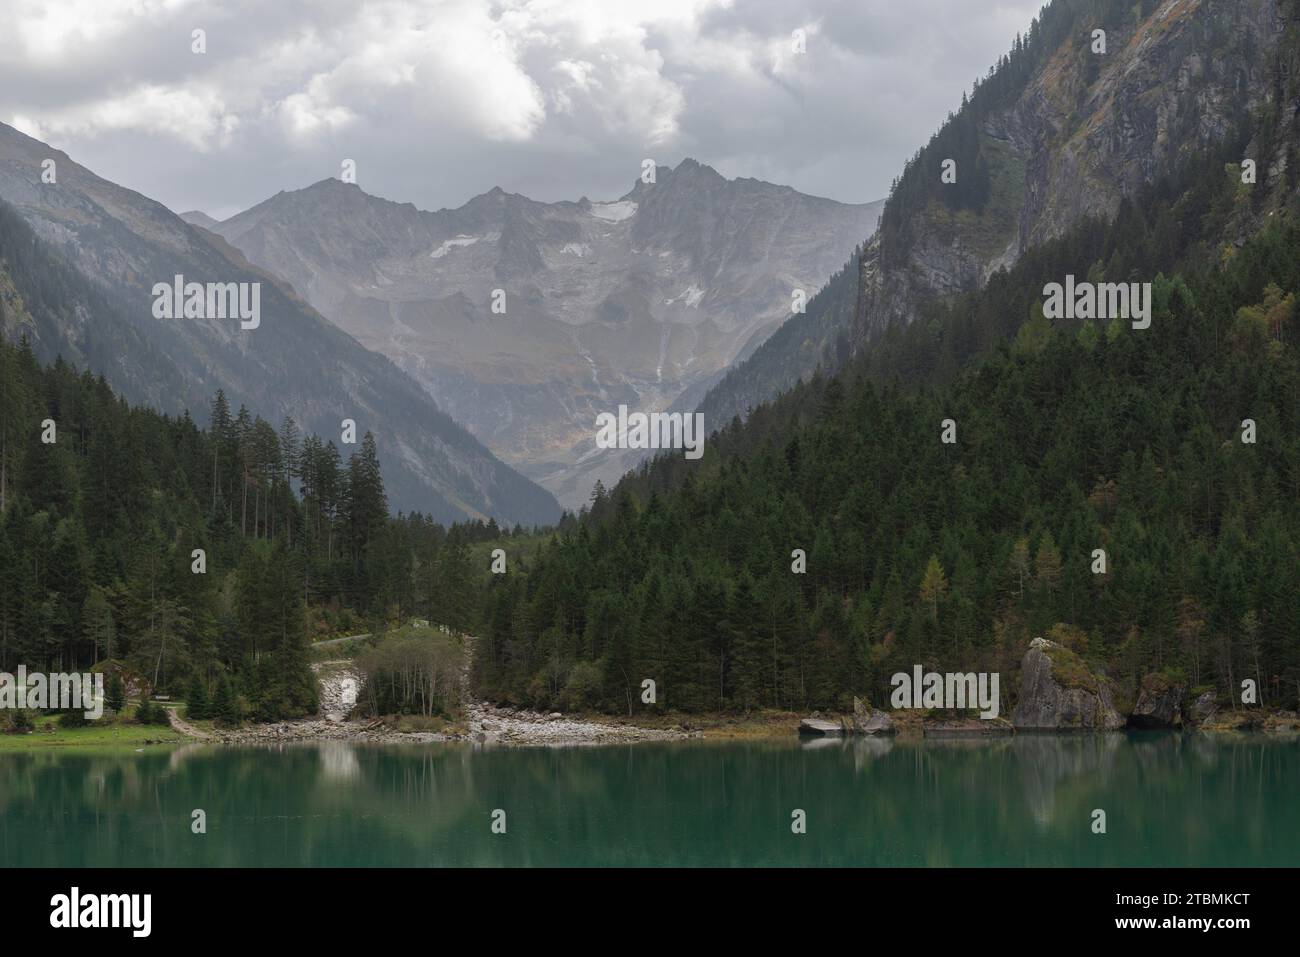 Stilluptal, Stiillup reservoir (1116m), Stillupgrund, Mayrhofen, reservoir lake, alpine mountain landscape, coniferous forest, haze, Zillertal Alps Stock Photo